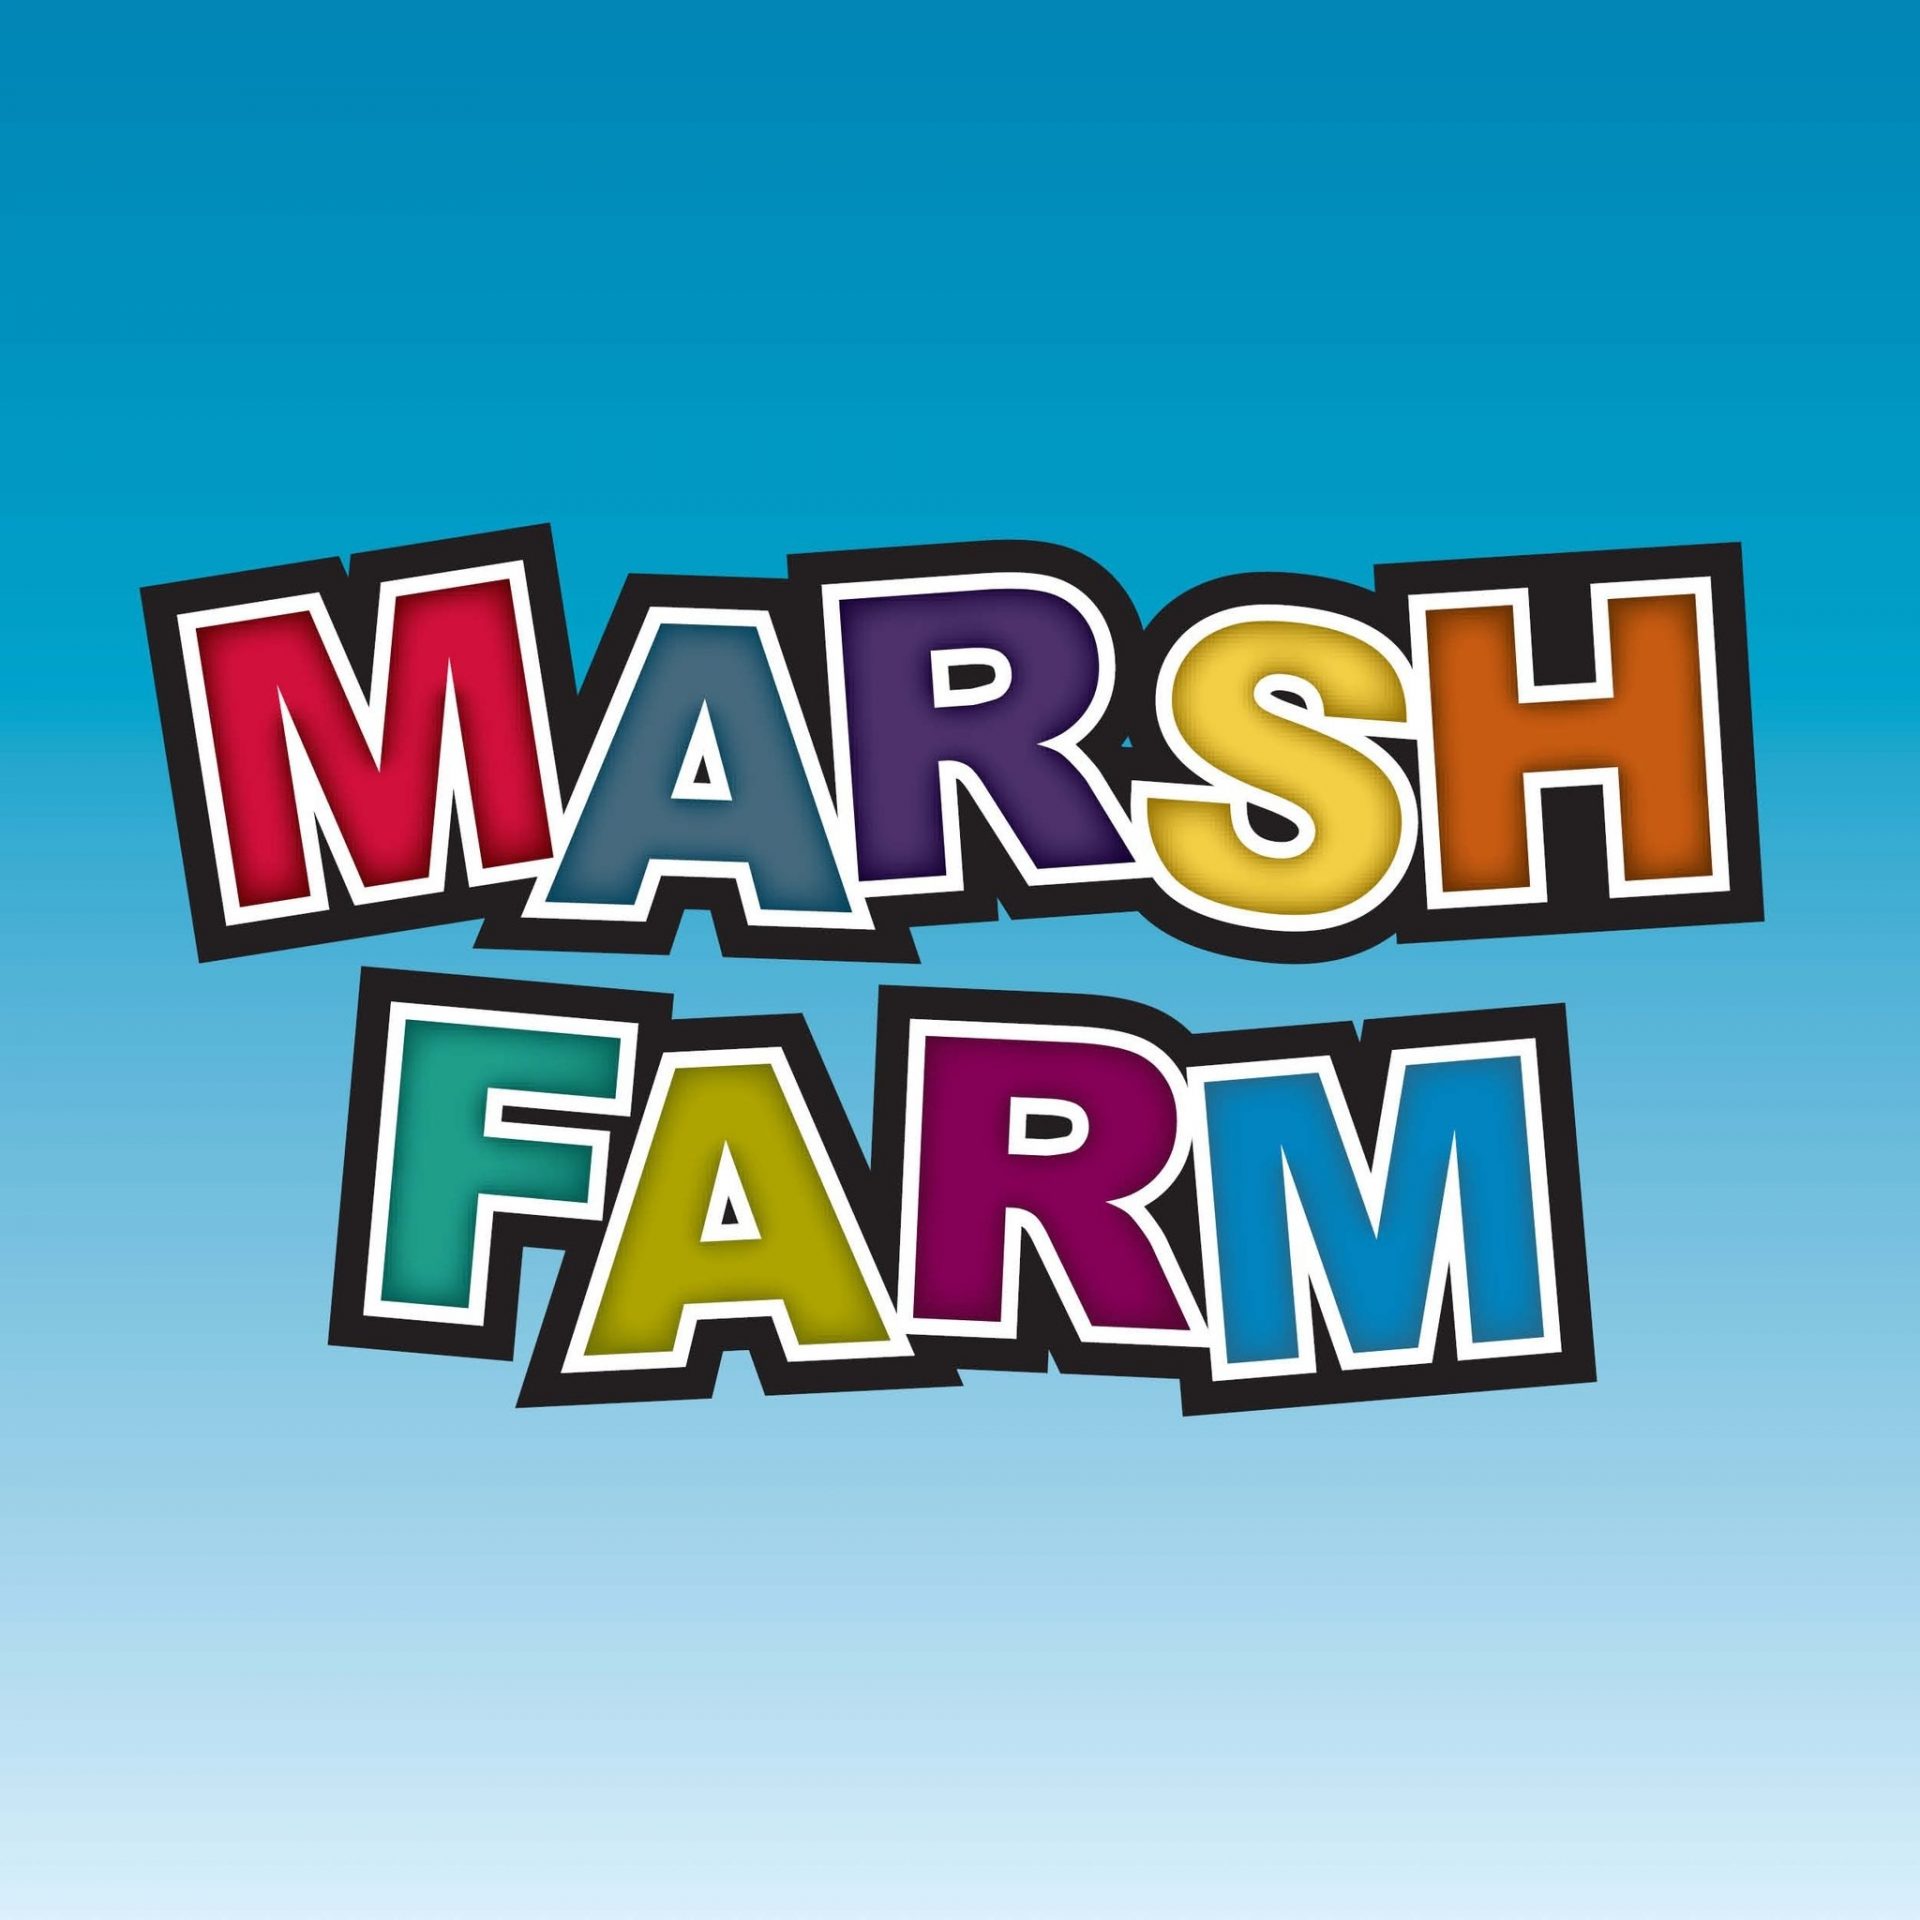 Marsh farm - Animal Adventure Park